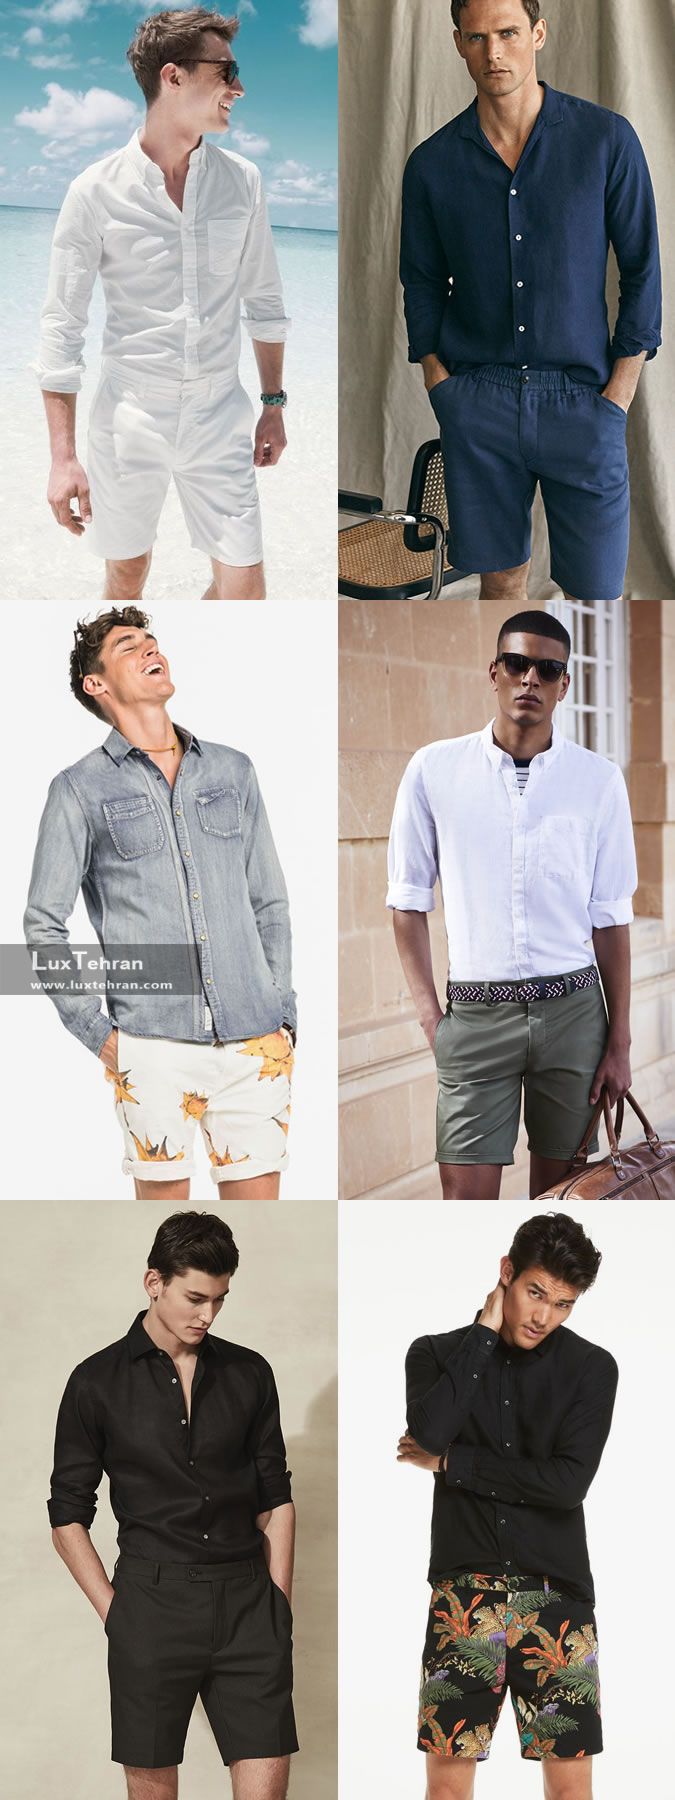  پیشنهاد ست لباس مردانه تابستانه